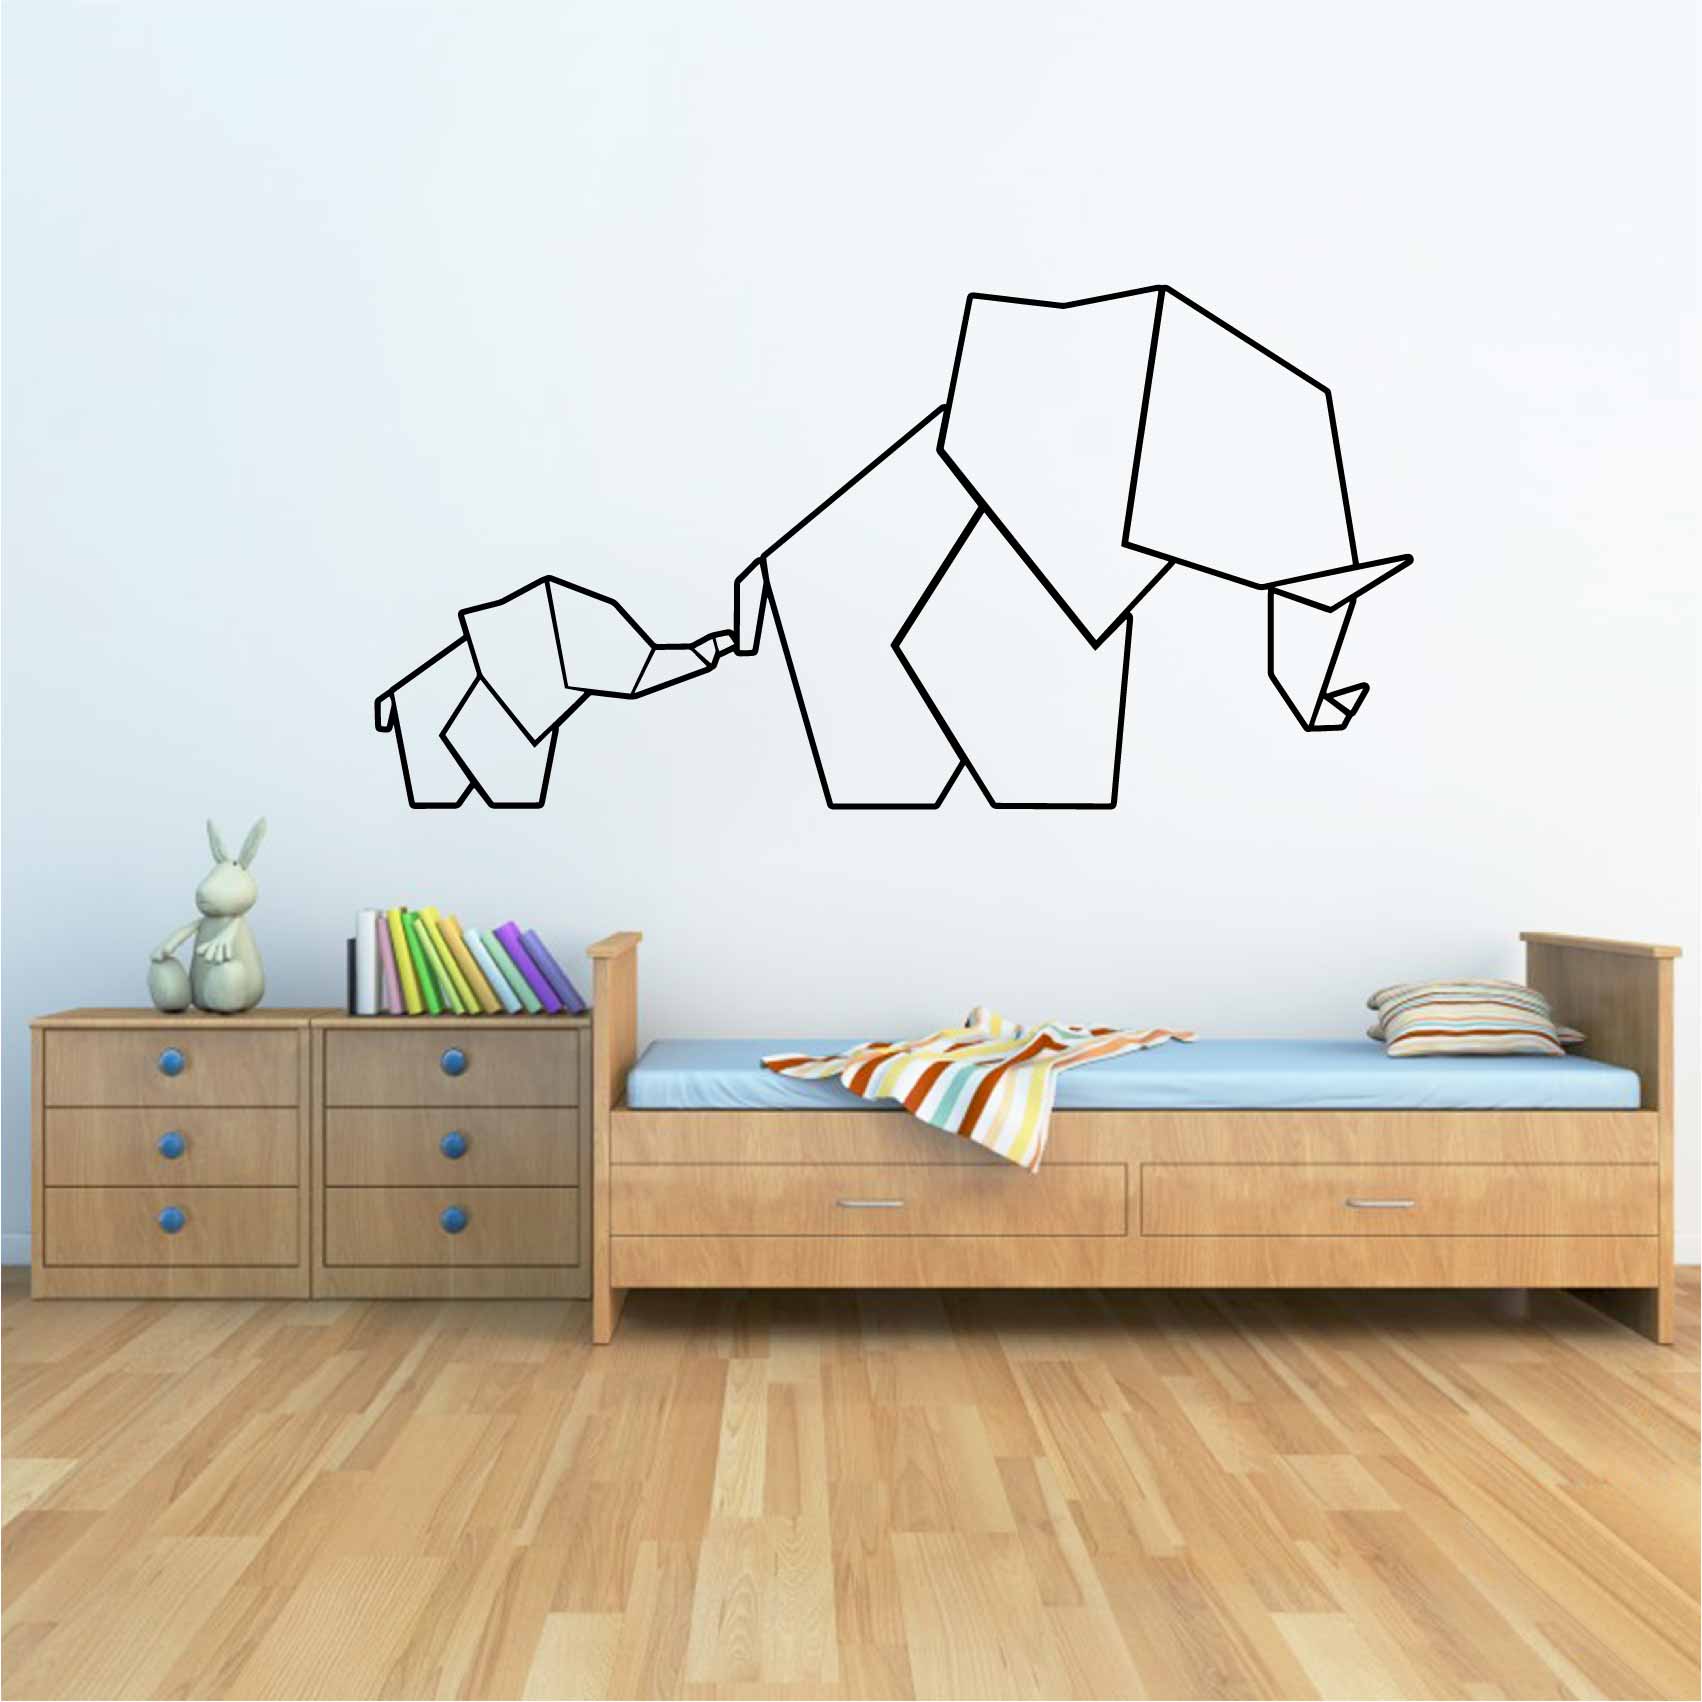 stickers-elephant-origami-famille-mignon-animaux-enfant-ref1elephant-autocollant-mural-stickers-muraux-sticker-deco-salon-cuisine-chambre-min